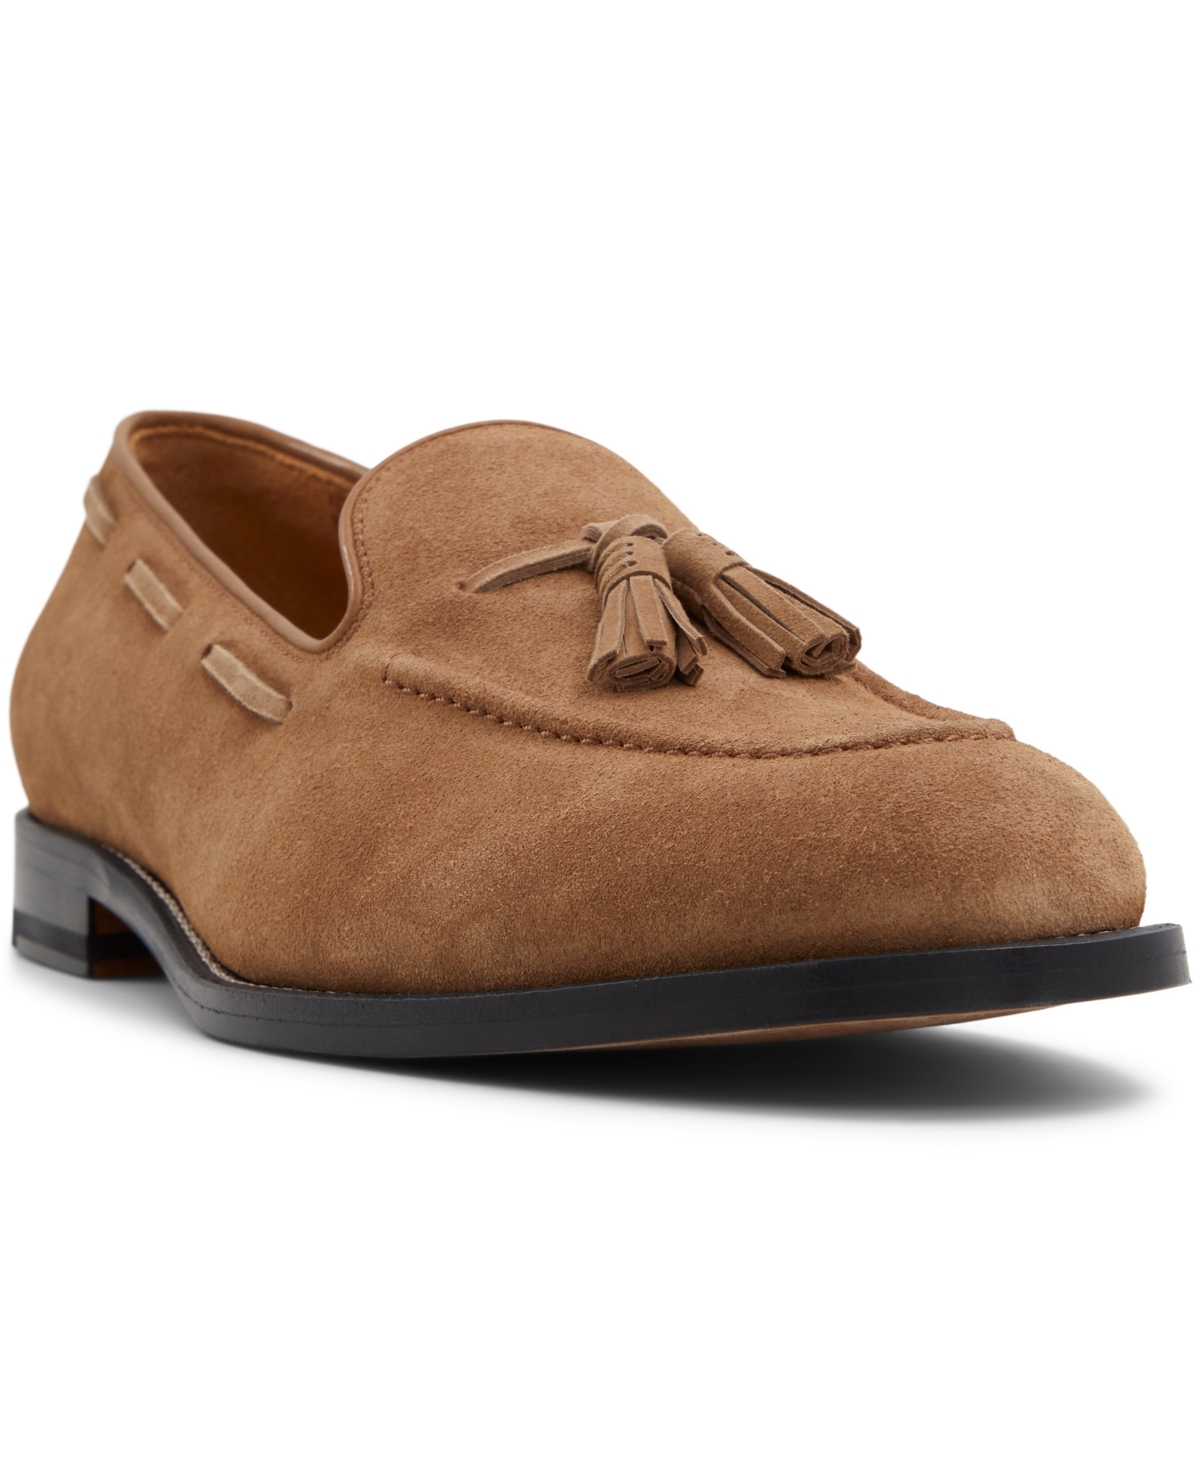 Men's Charlton Tassel Dress Loafers - Medium brown